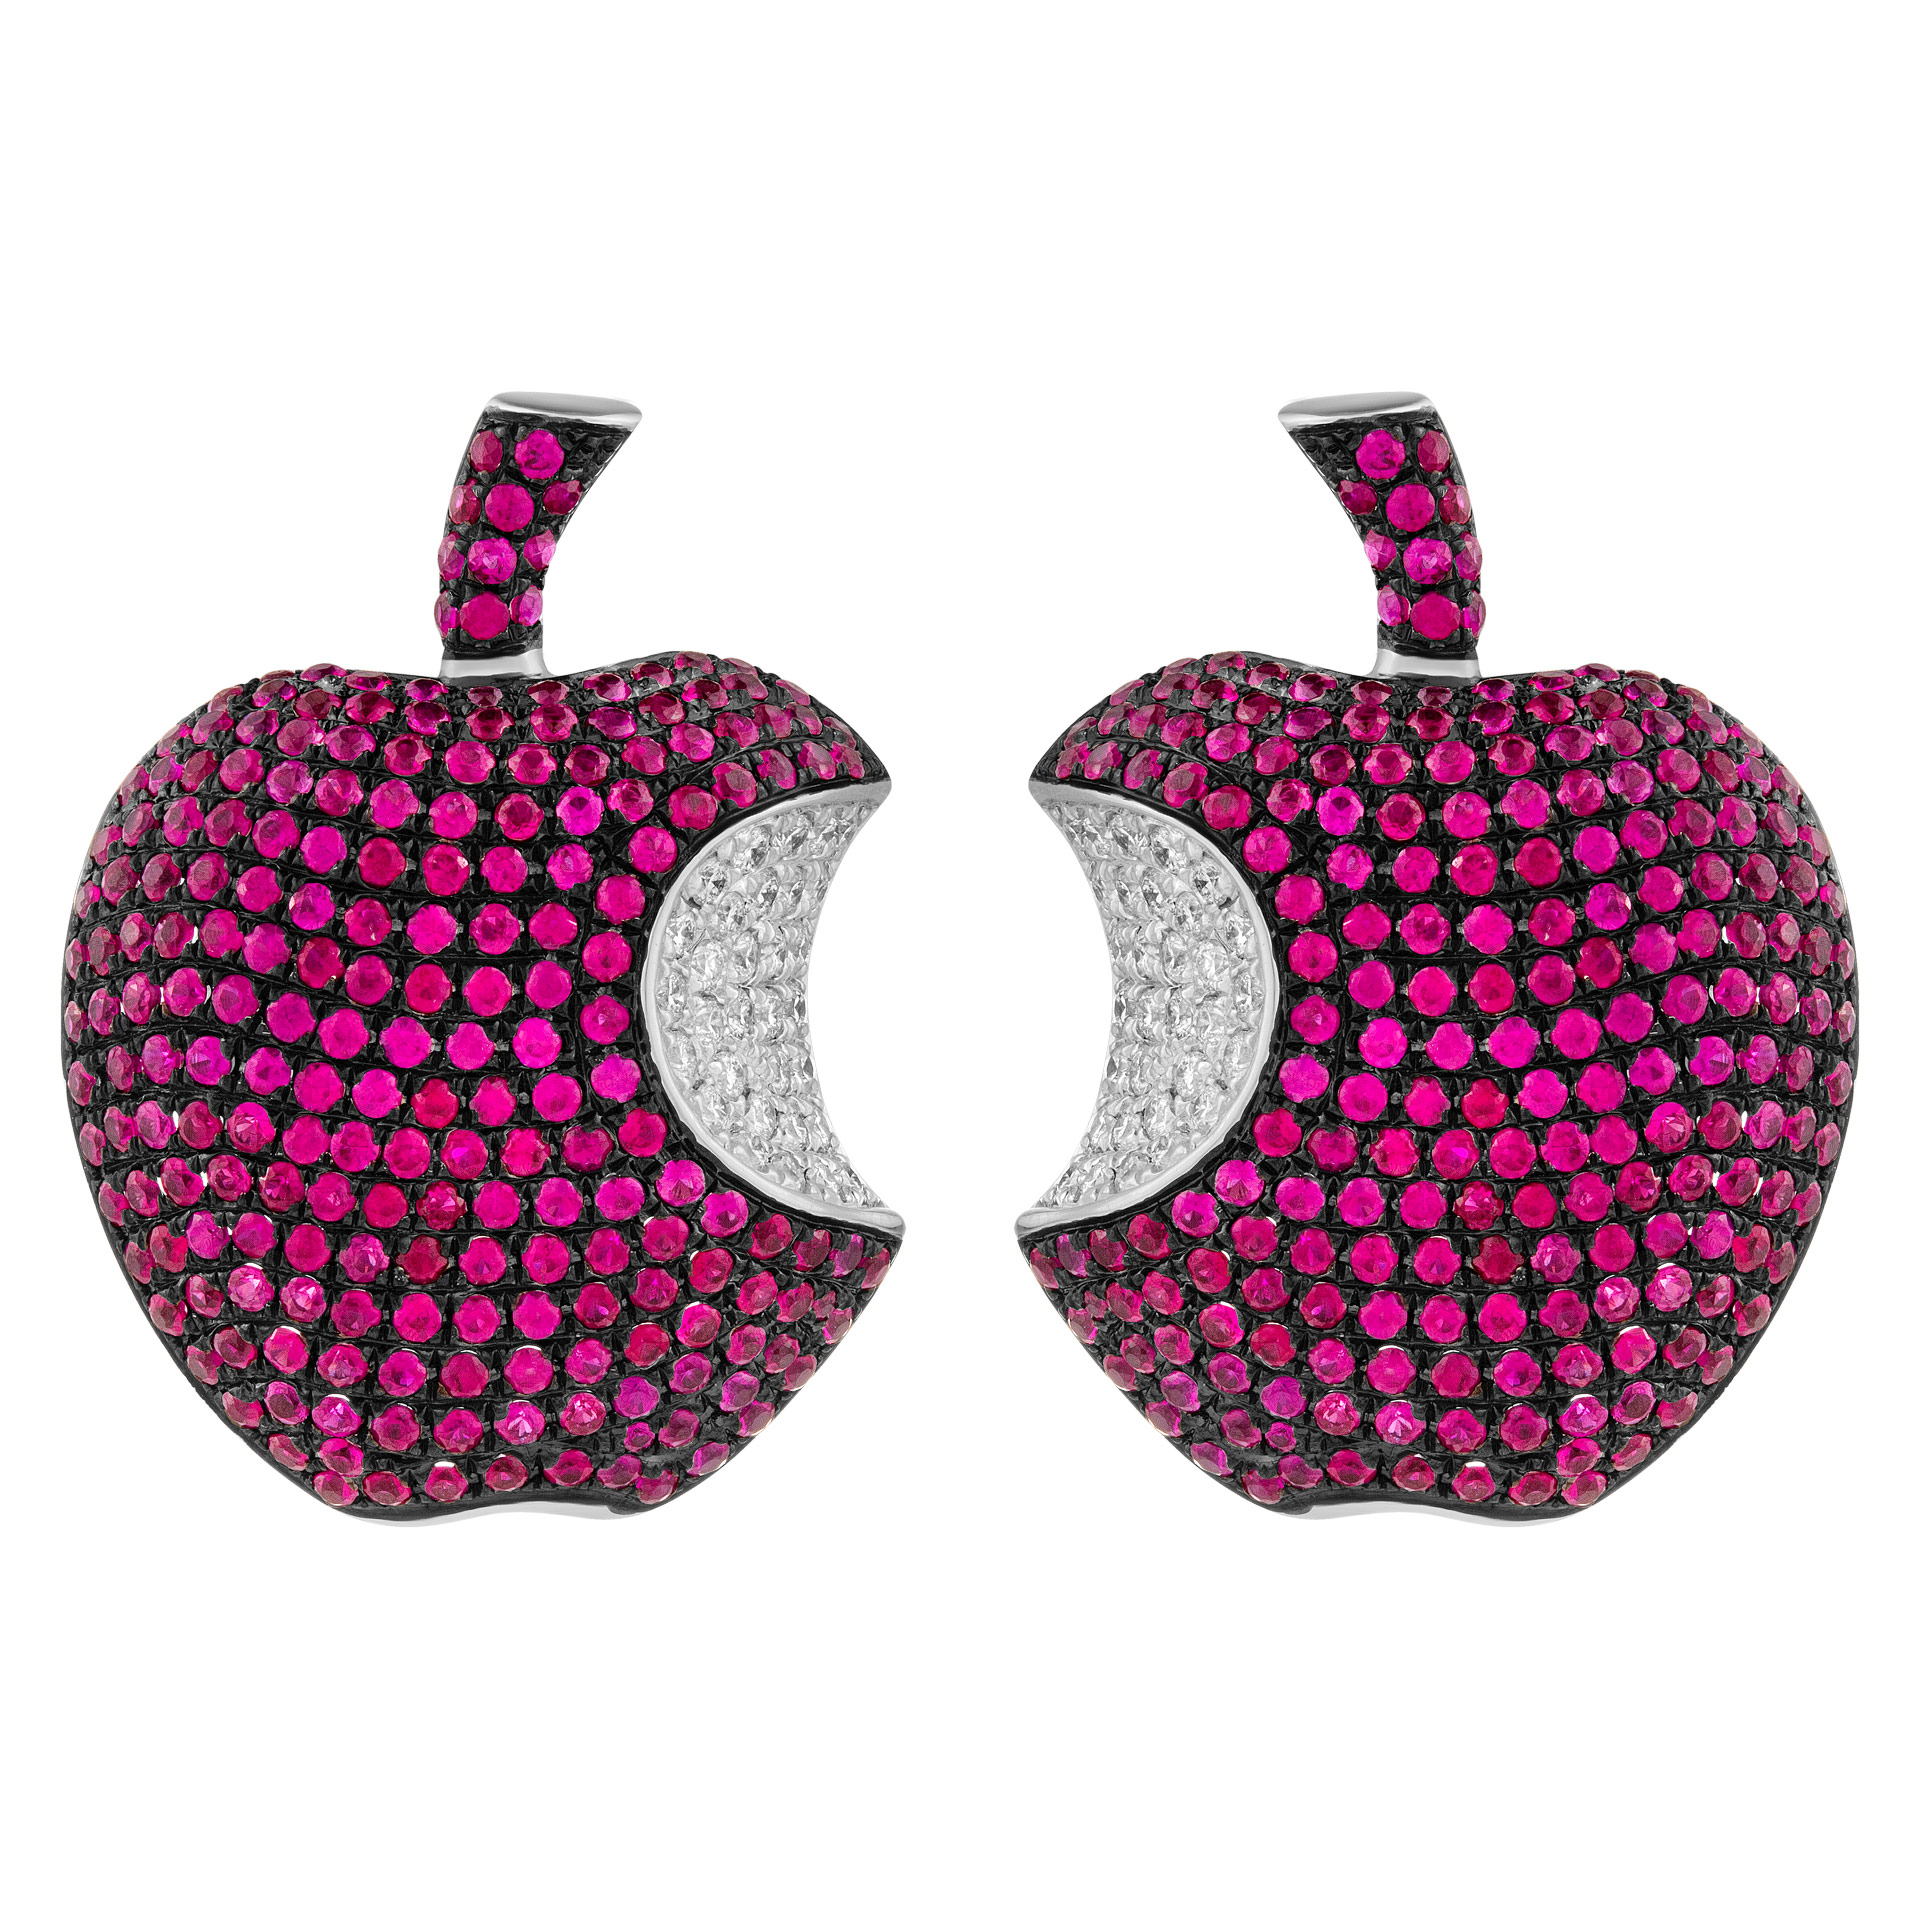 Ruby apple 18K white gold earrings with diamonds